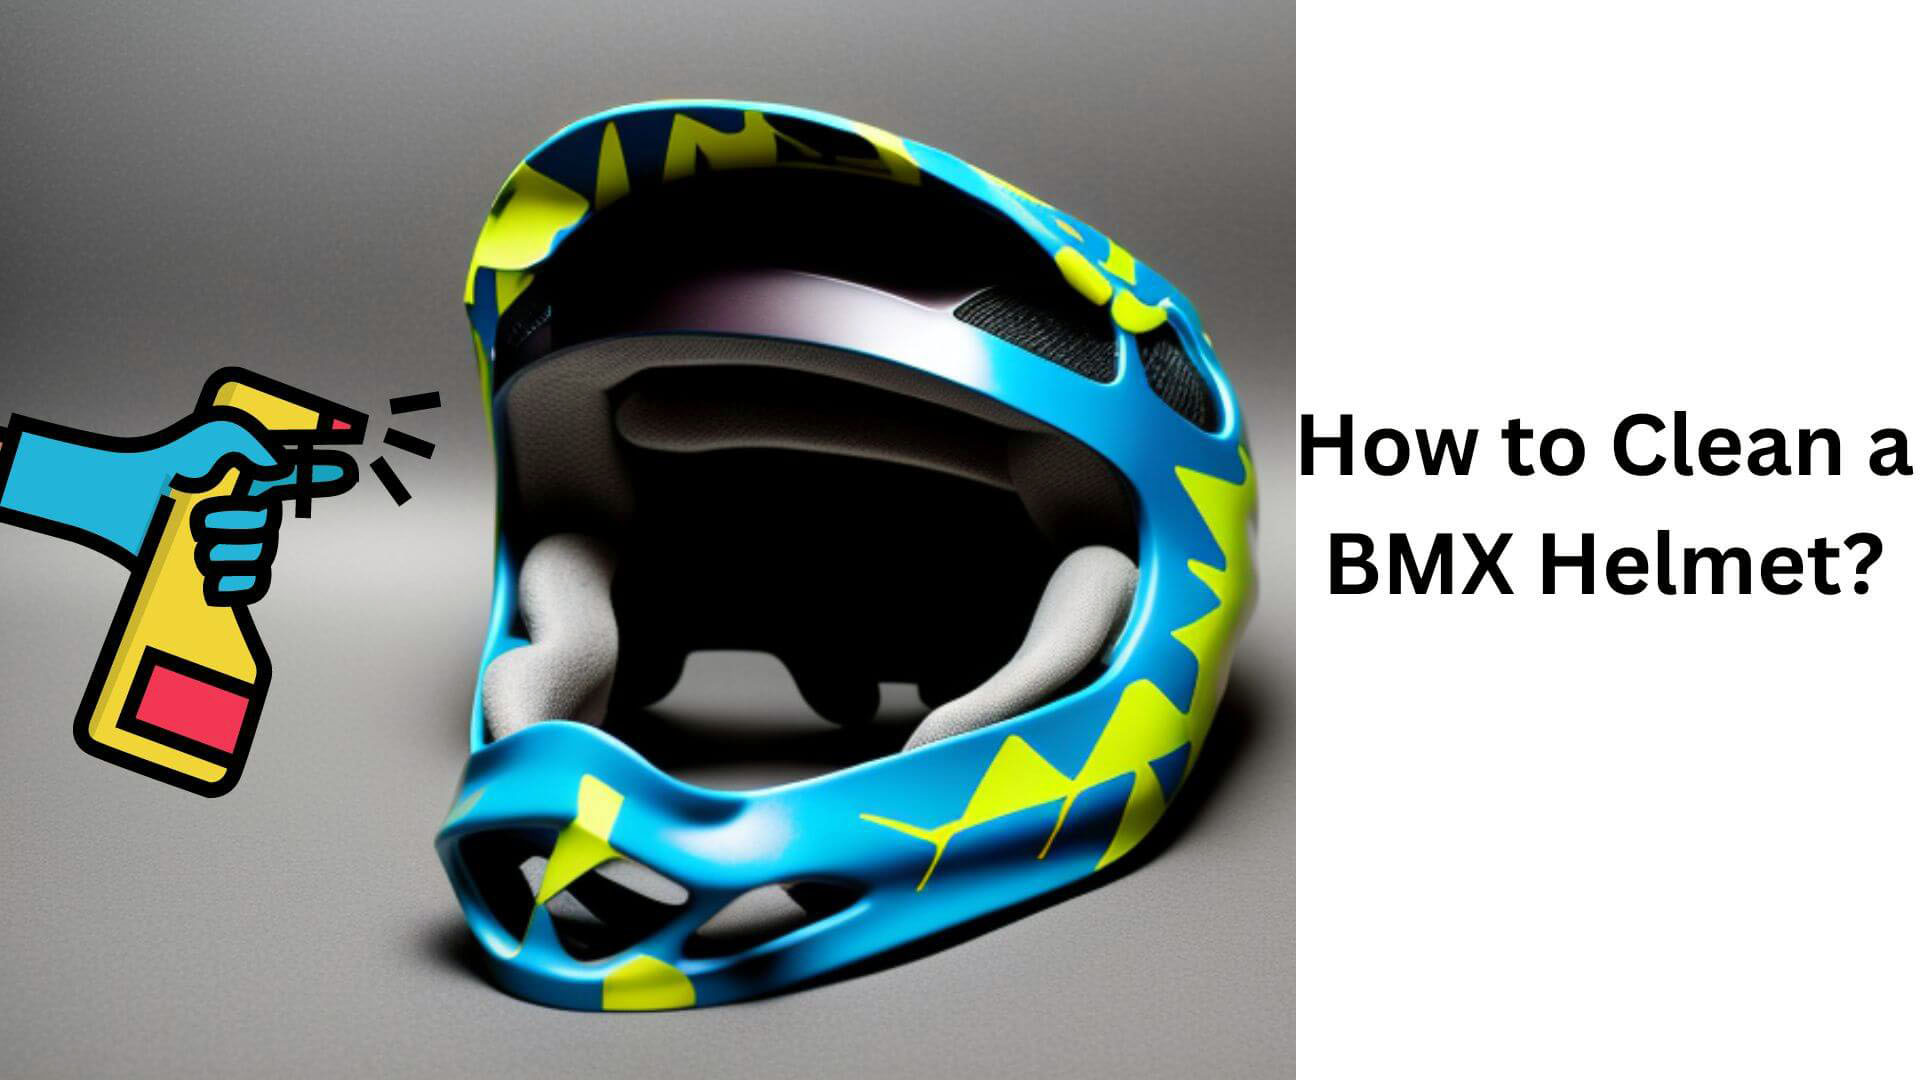 How to Clean a BMX Helmet?